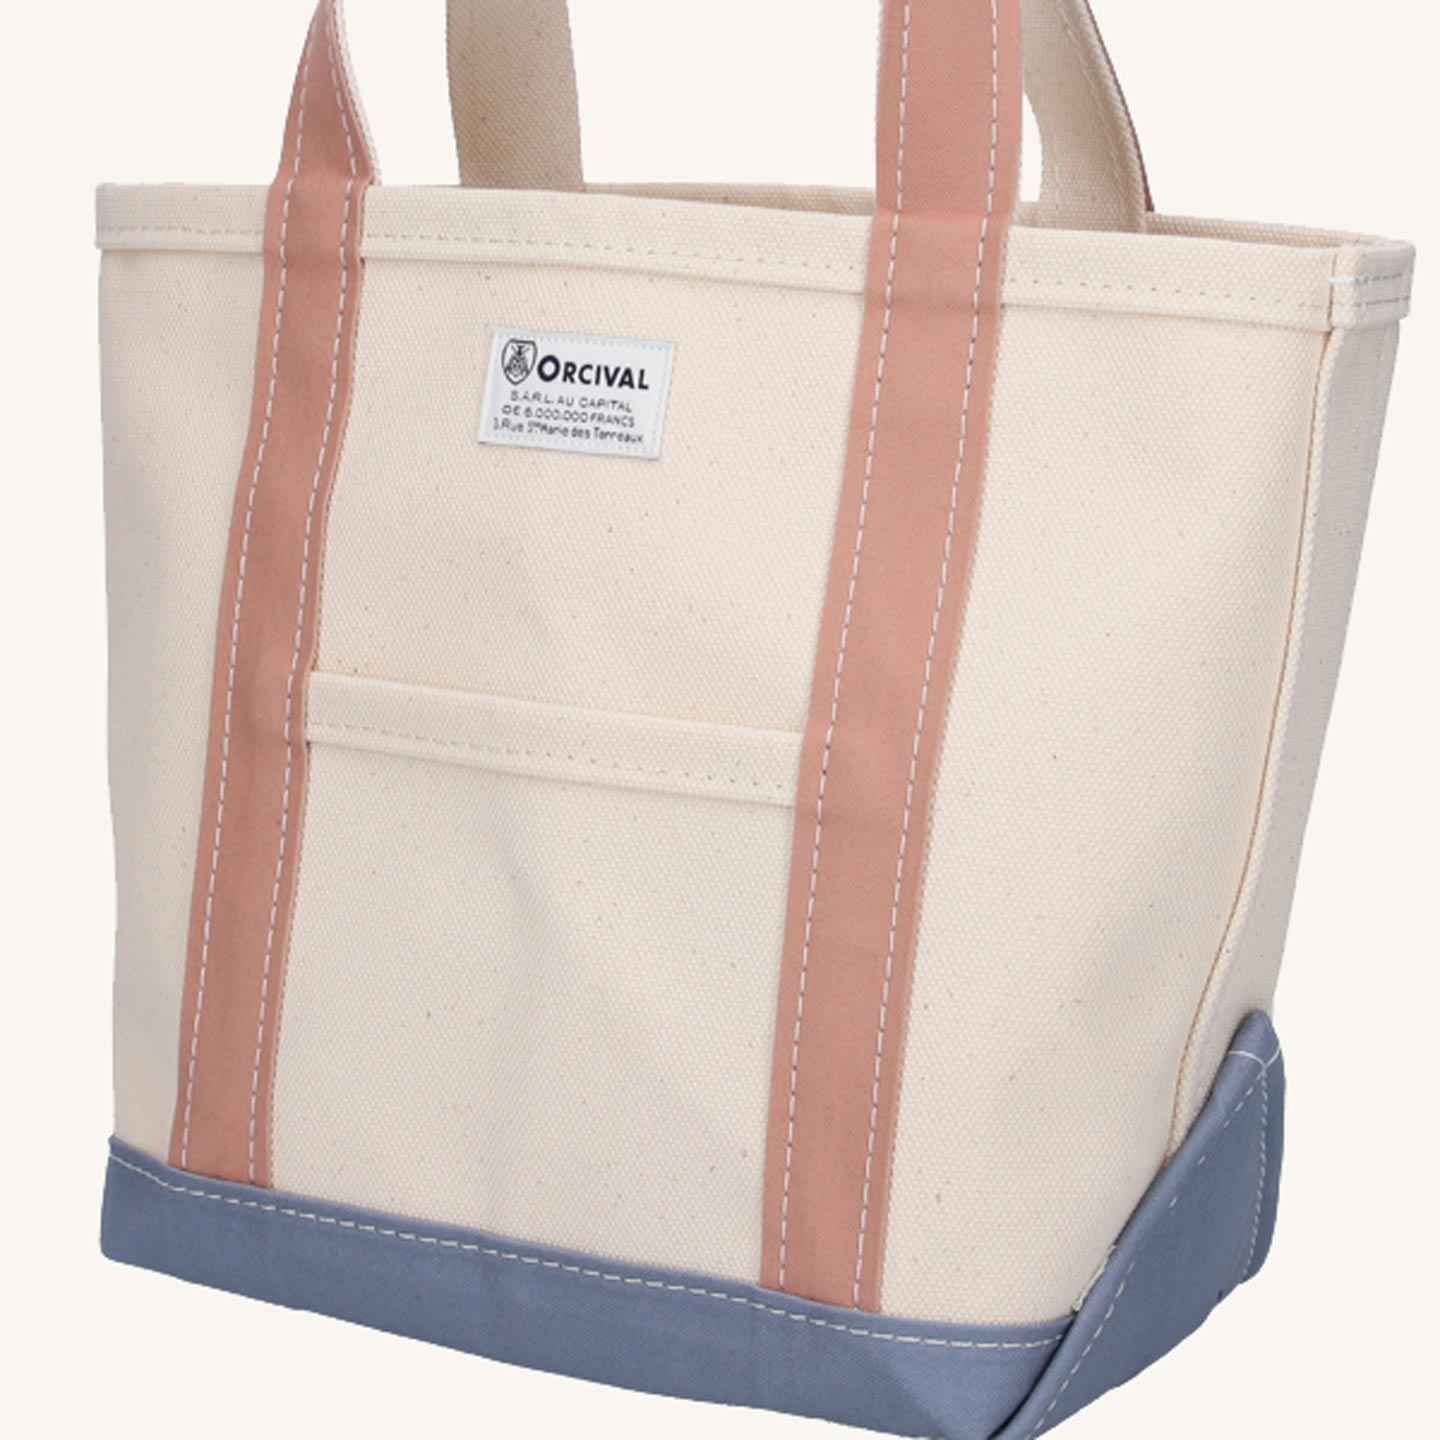 Le tote-bag Ecru / Smocky Pink / Greyish Blue, format moyen de Orcival